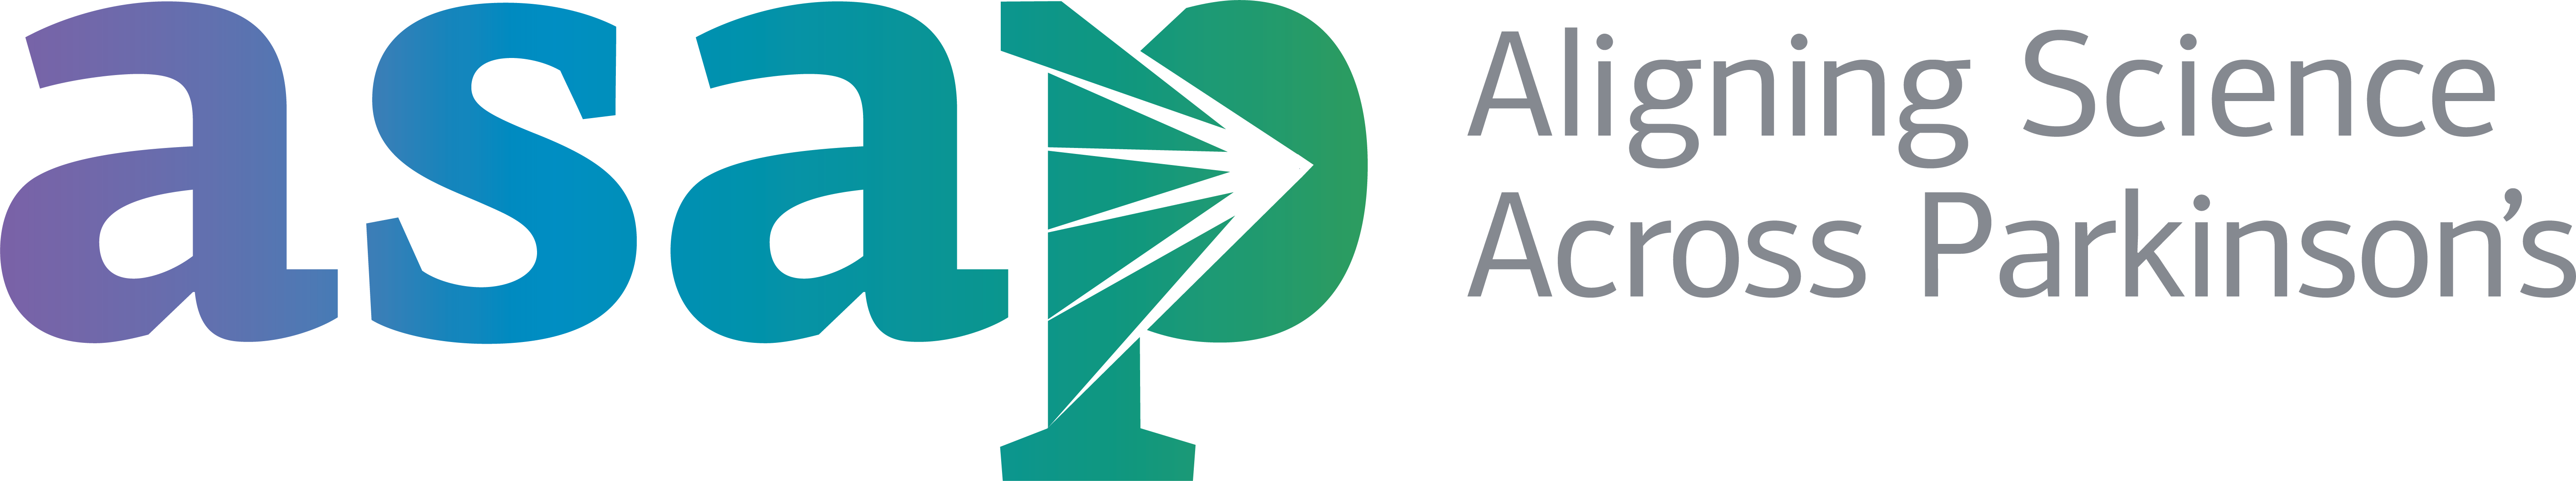 Aligning Science across parkinson's logo